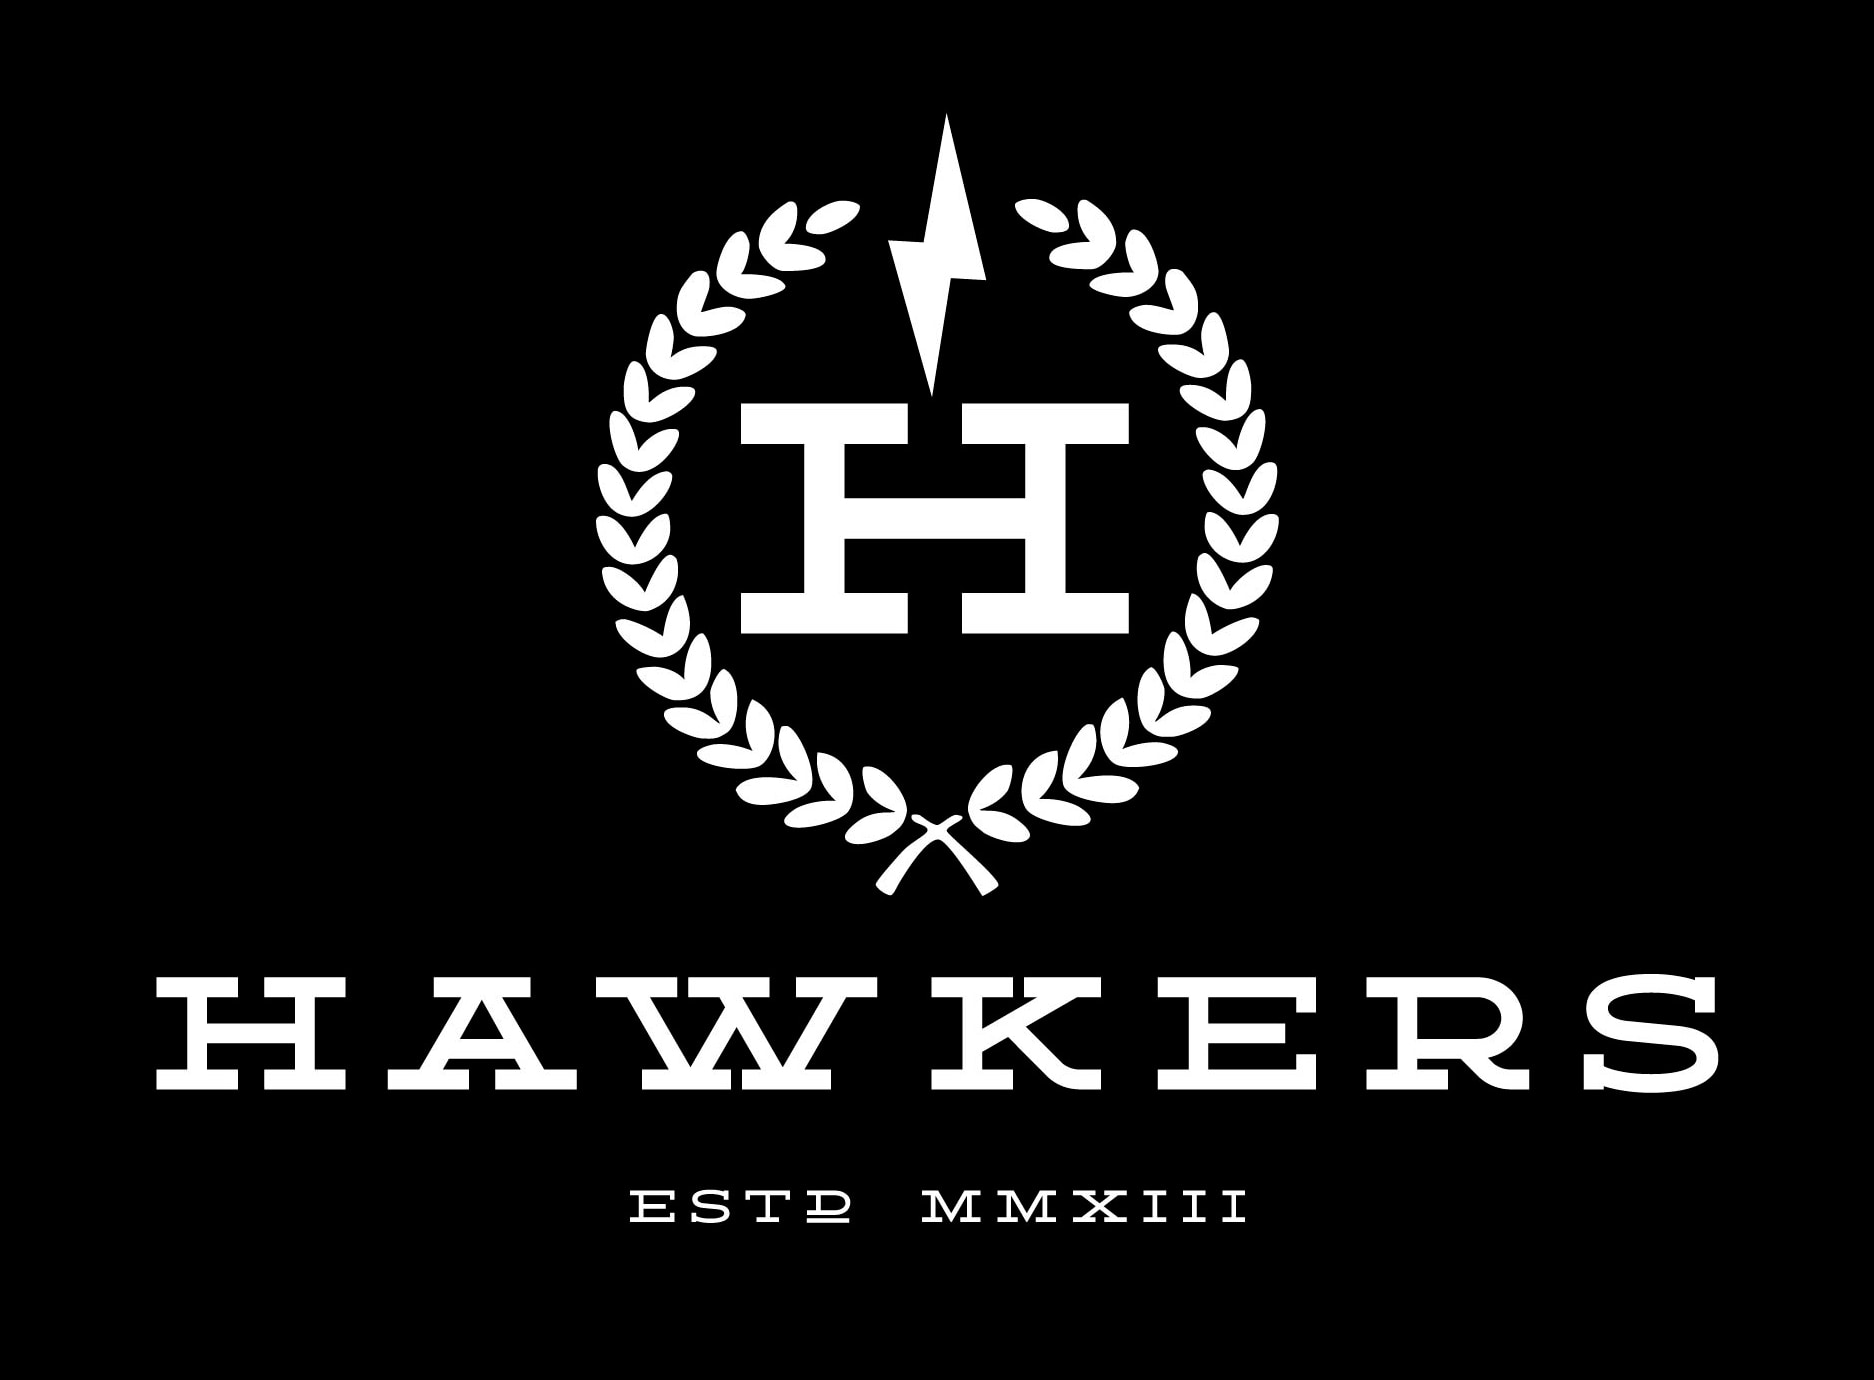 hawkers-co.jpg